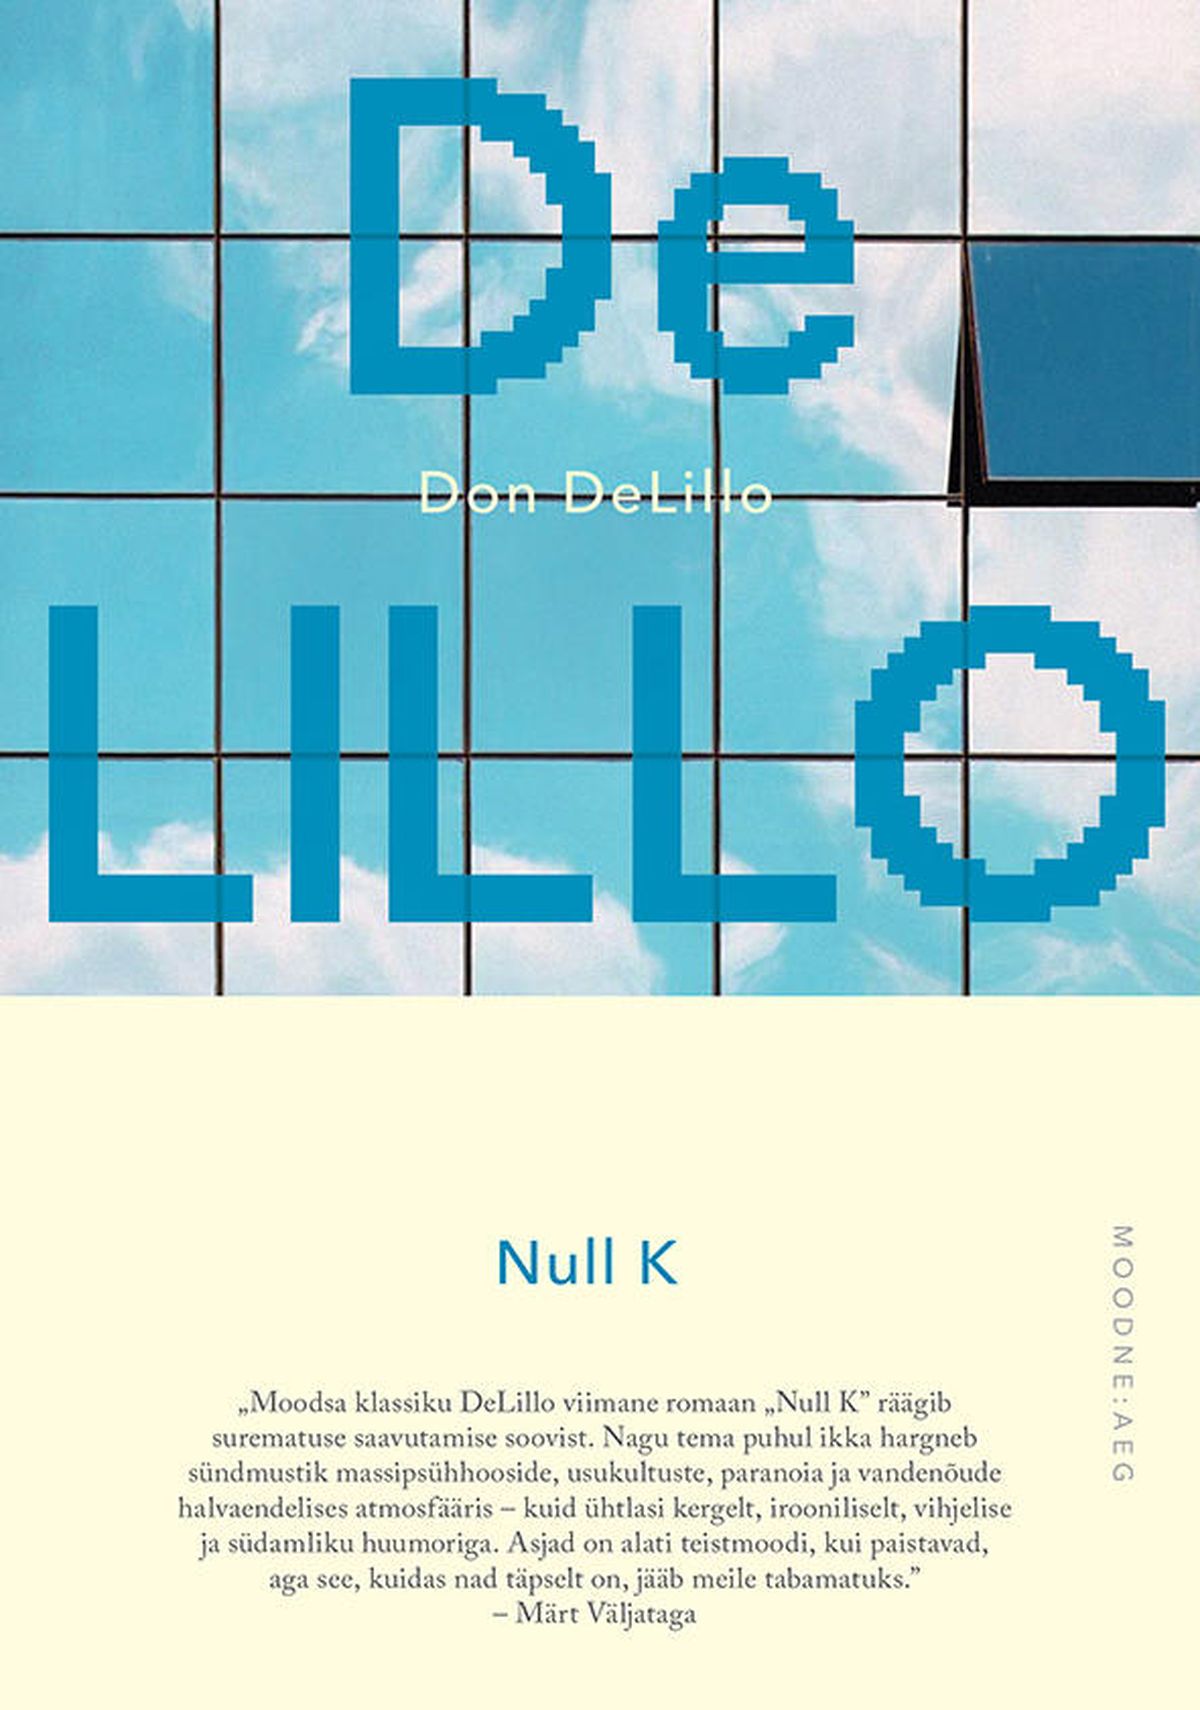 Don DeLillo "Null K"